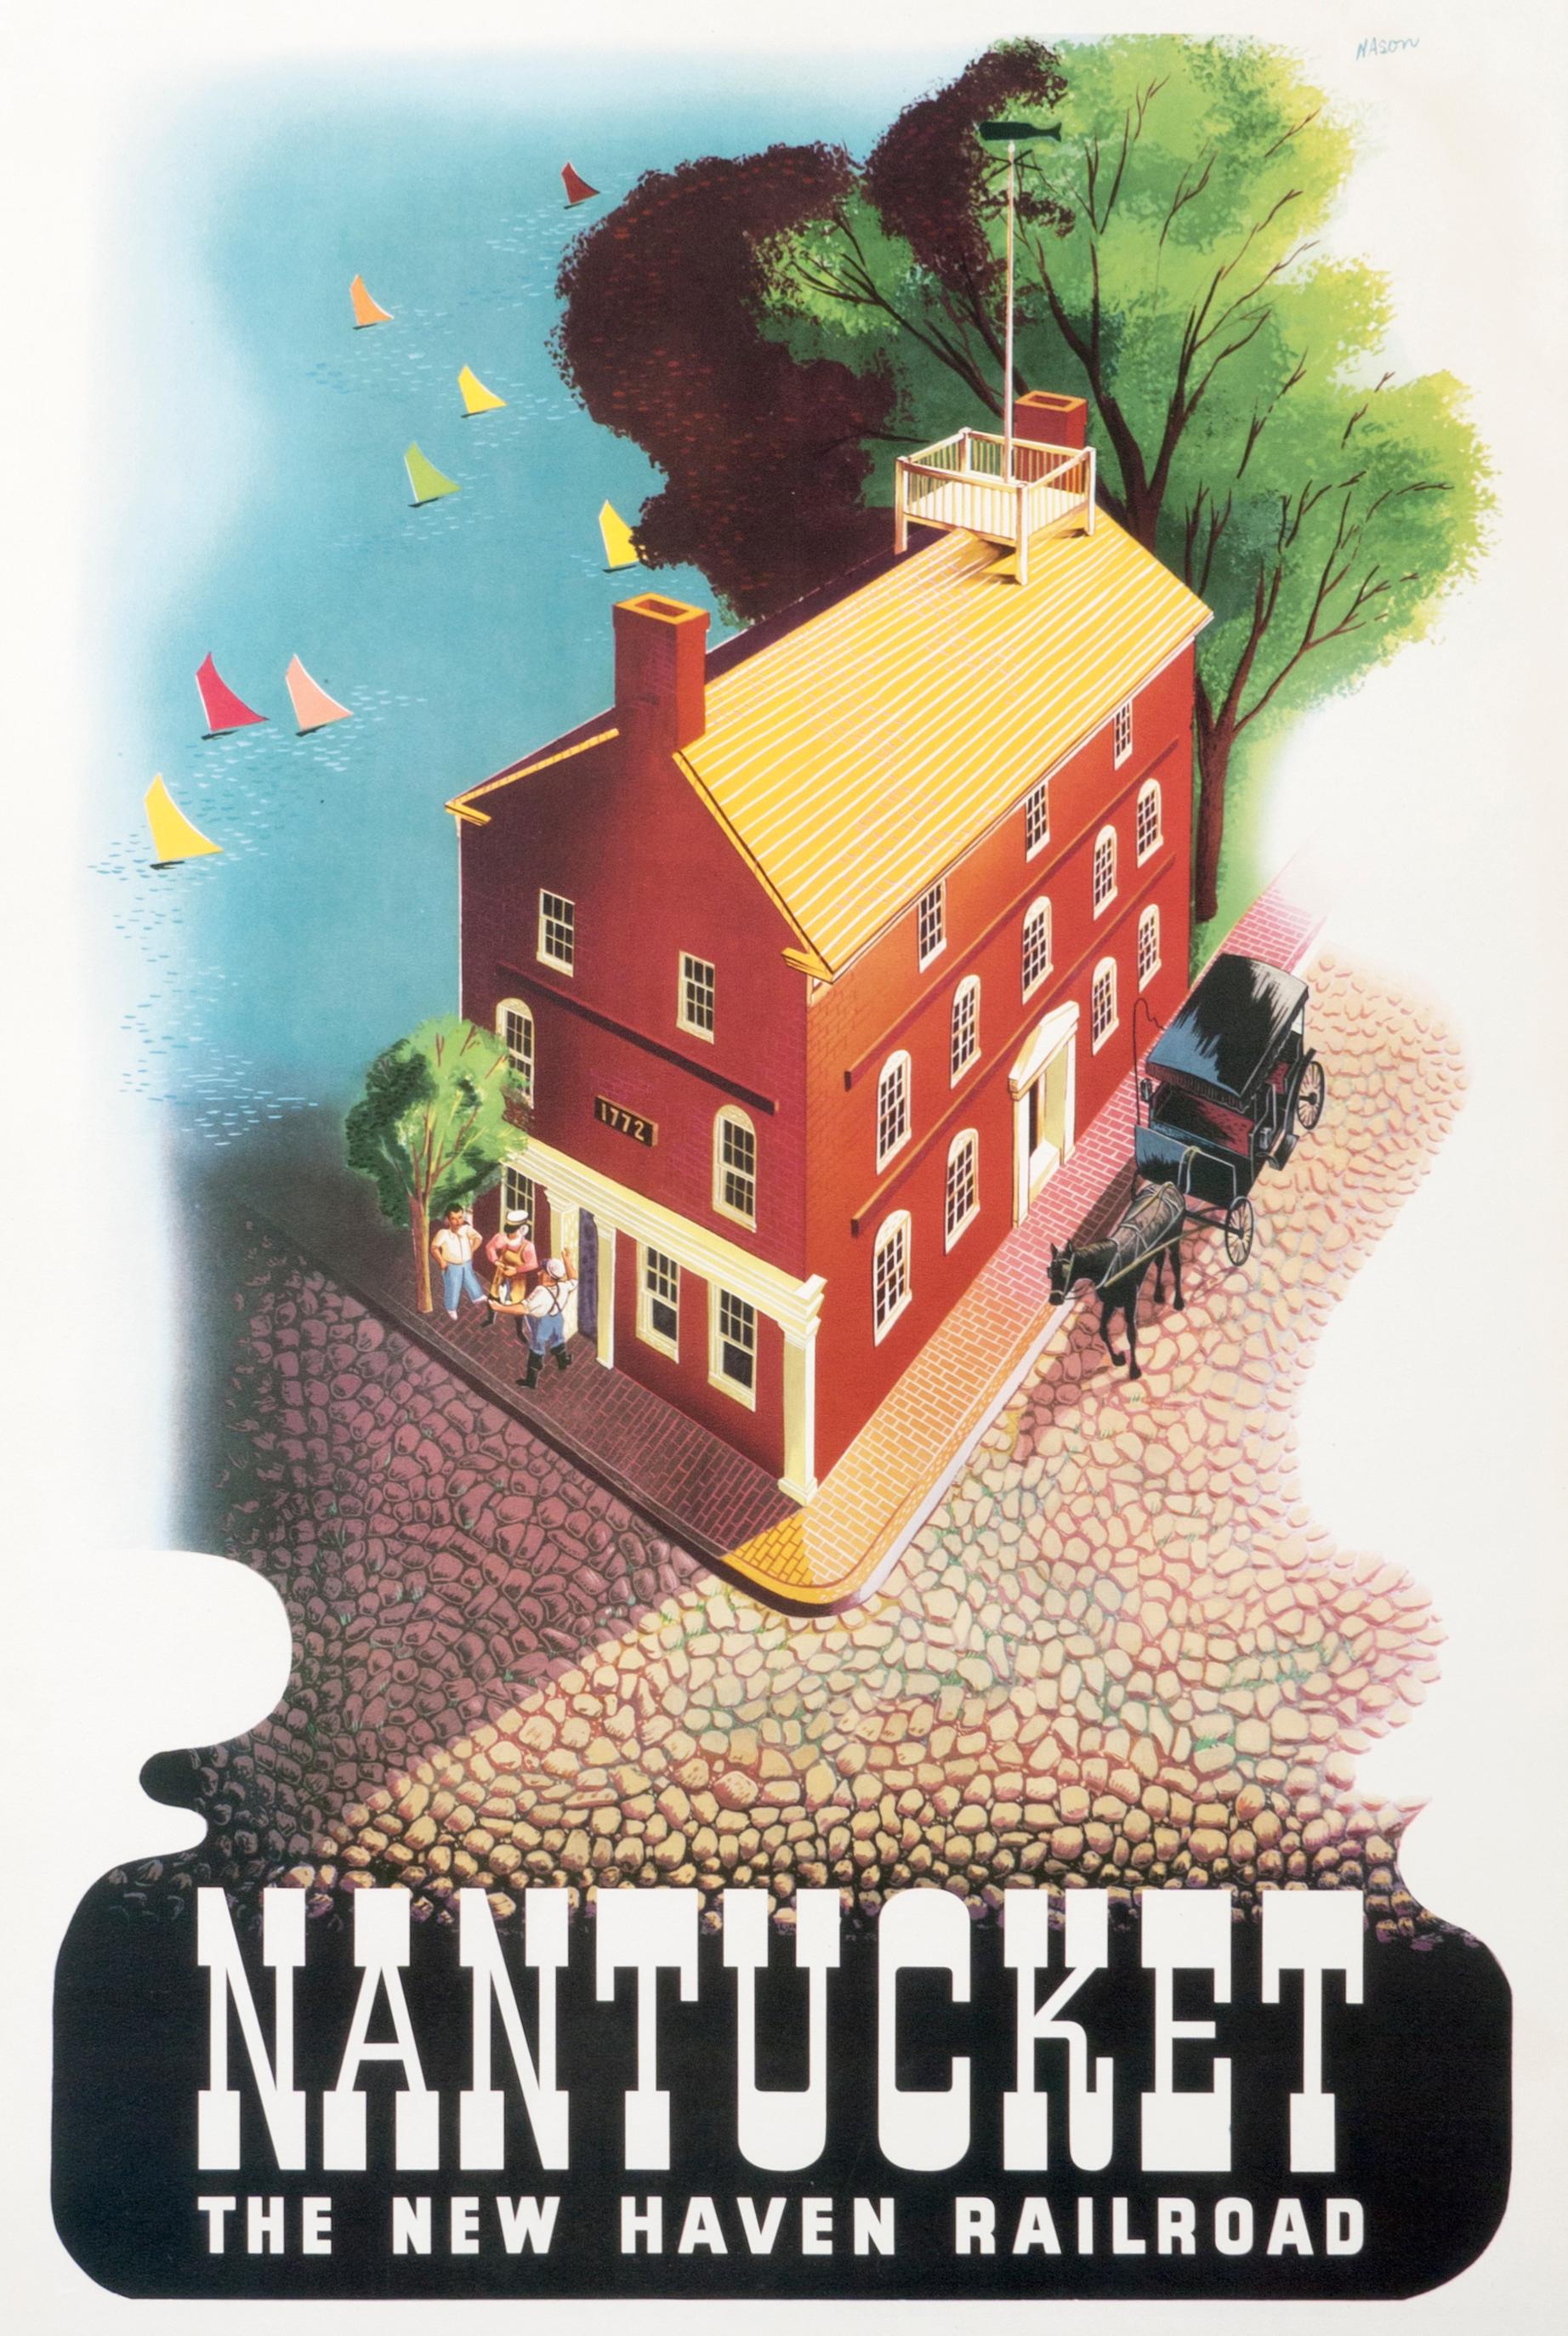 "Nantucket - The New Haven Railroad" Original Vintage Railroad Poster - Print by Ben Nason